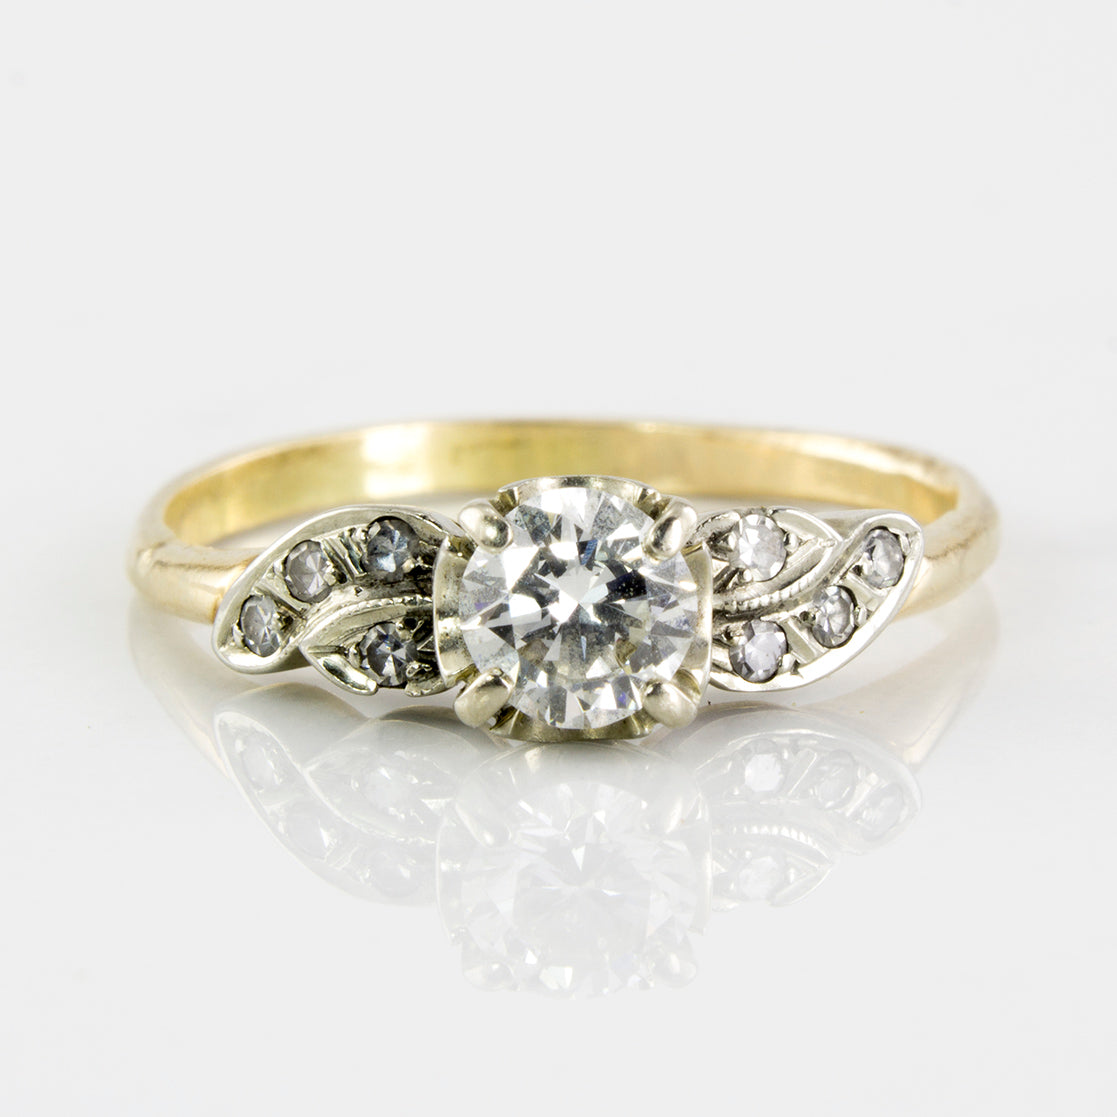 1940's Diamond Engagement Ring | 0.49 ctw | SZ 8.25 |